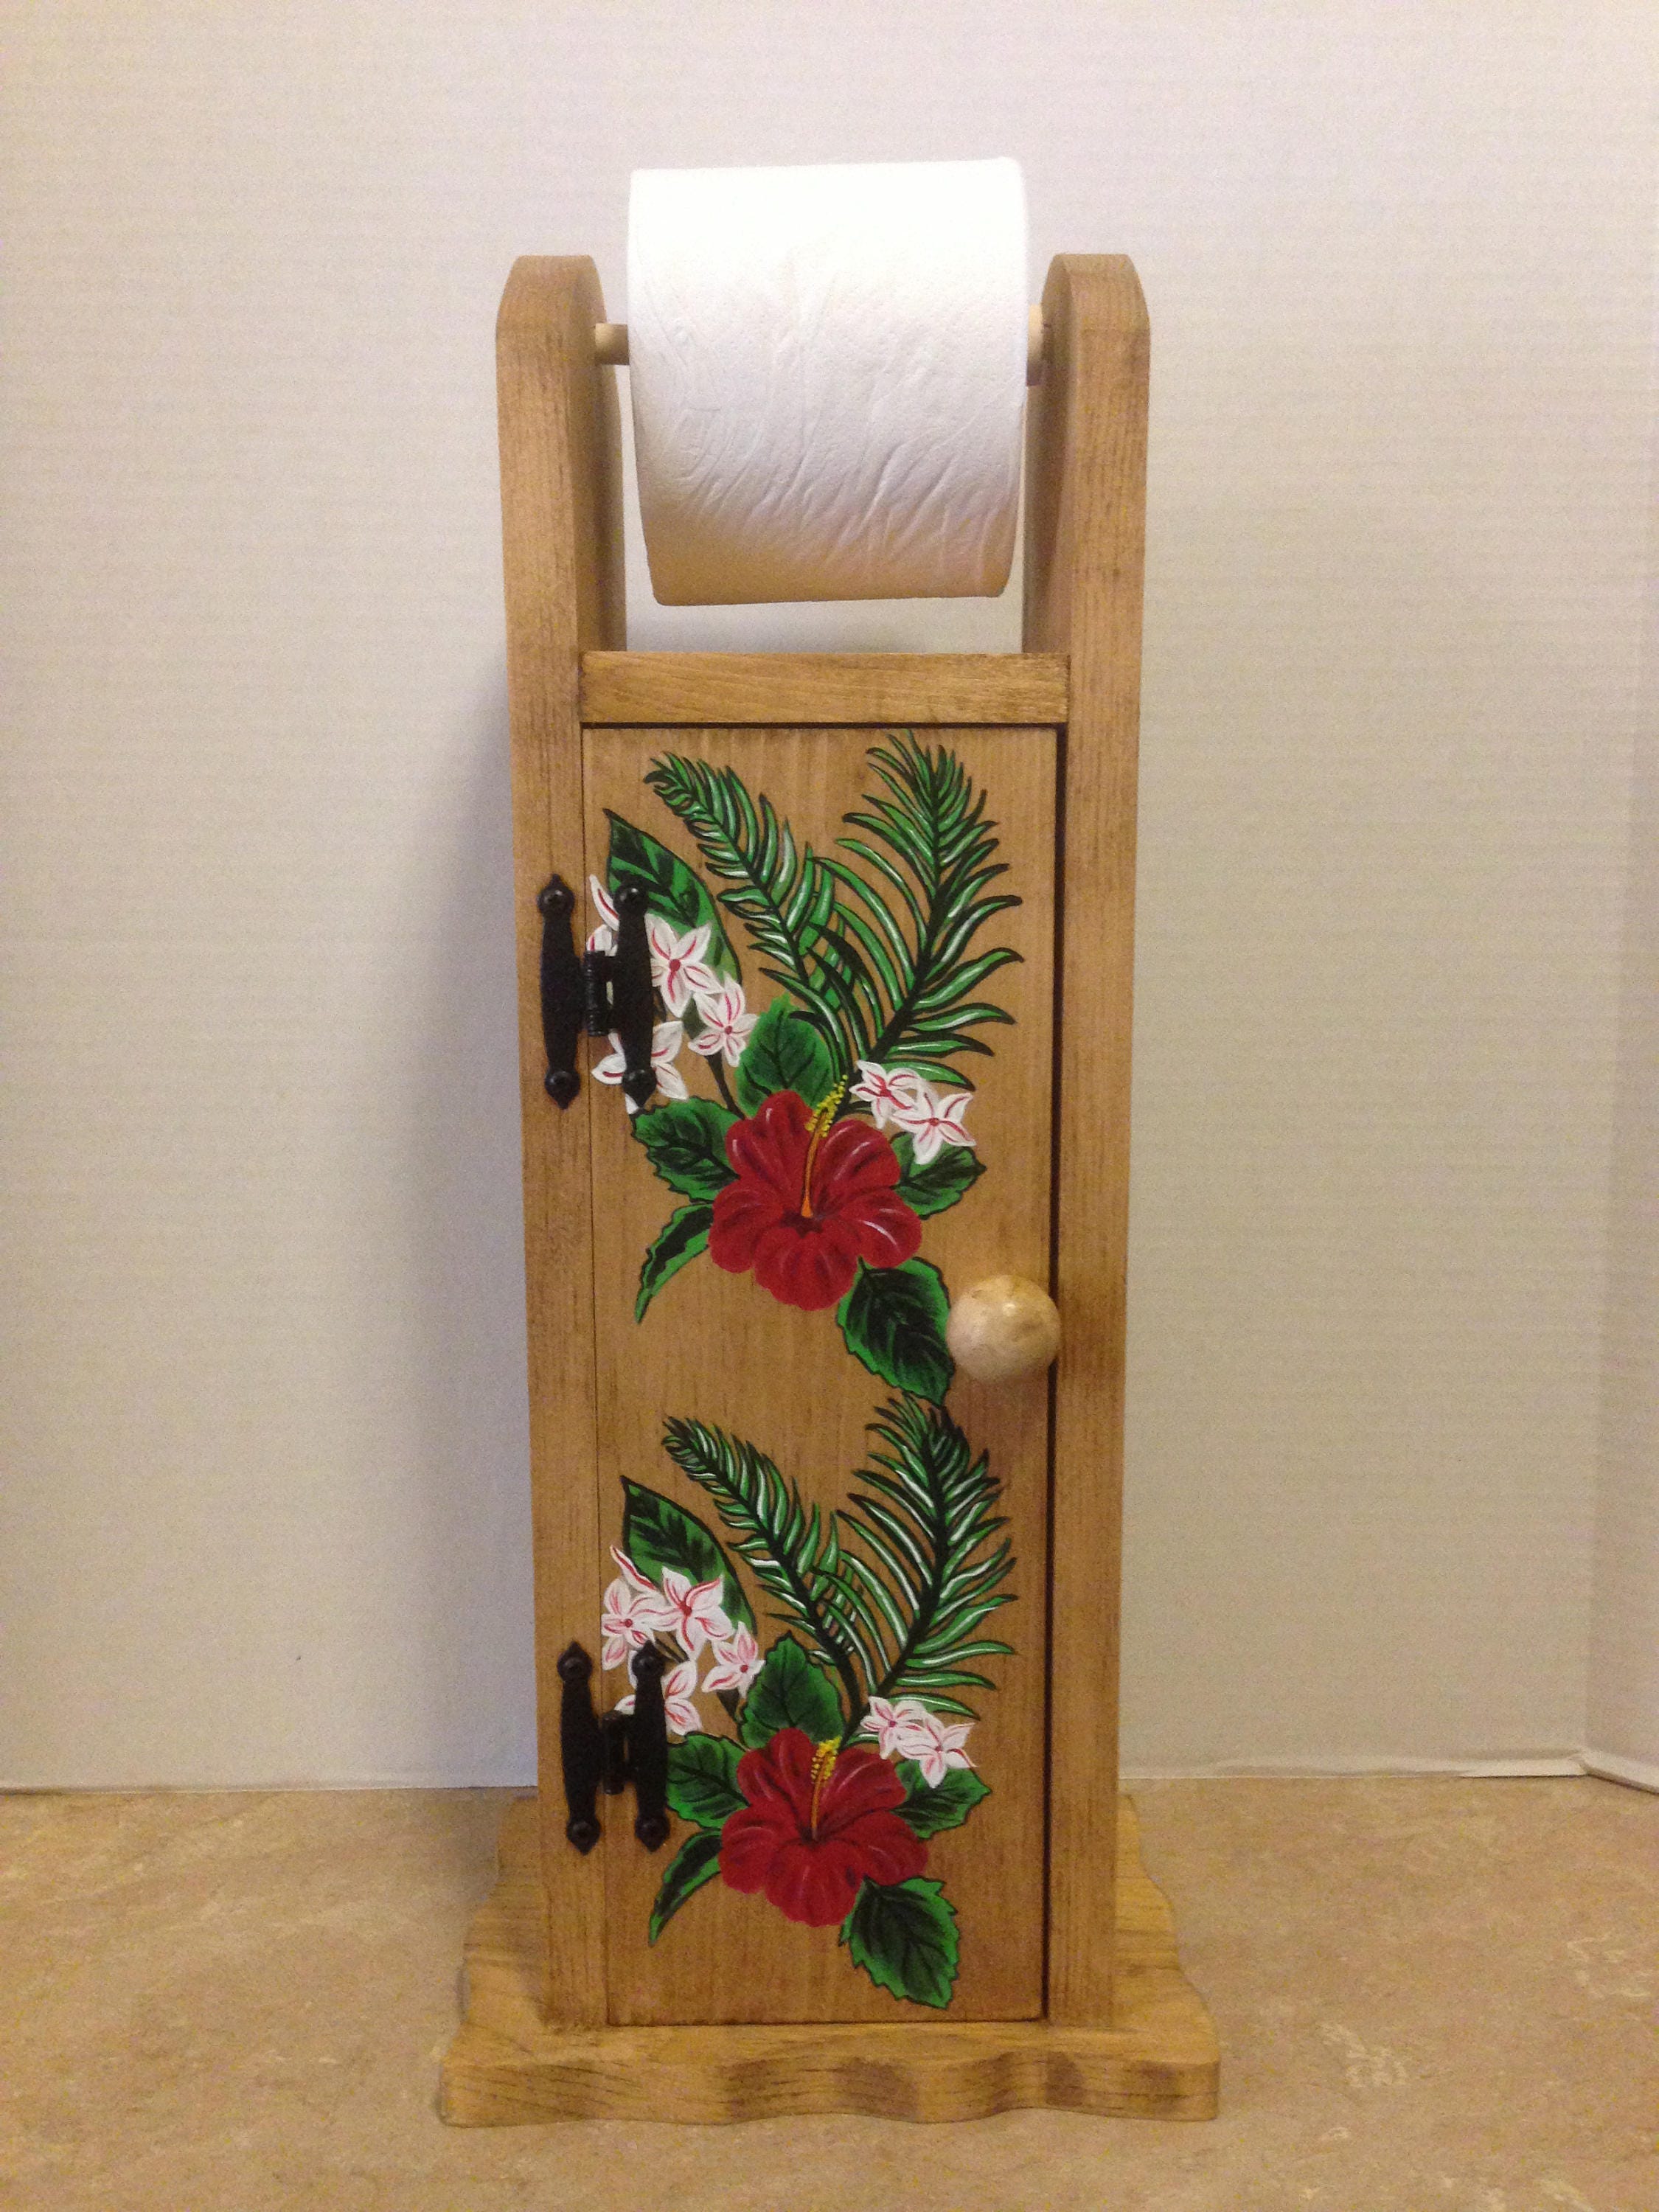 Bill.F Wooden Tissue Holder Standing Roll Paper Towel Holder for